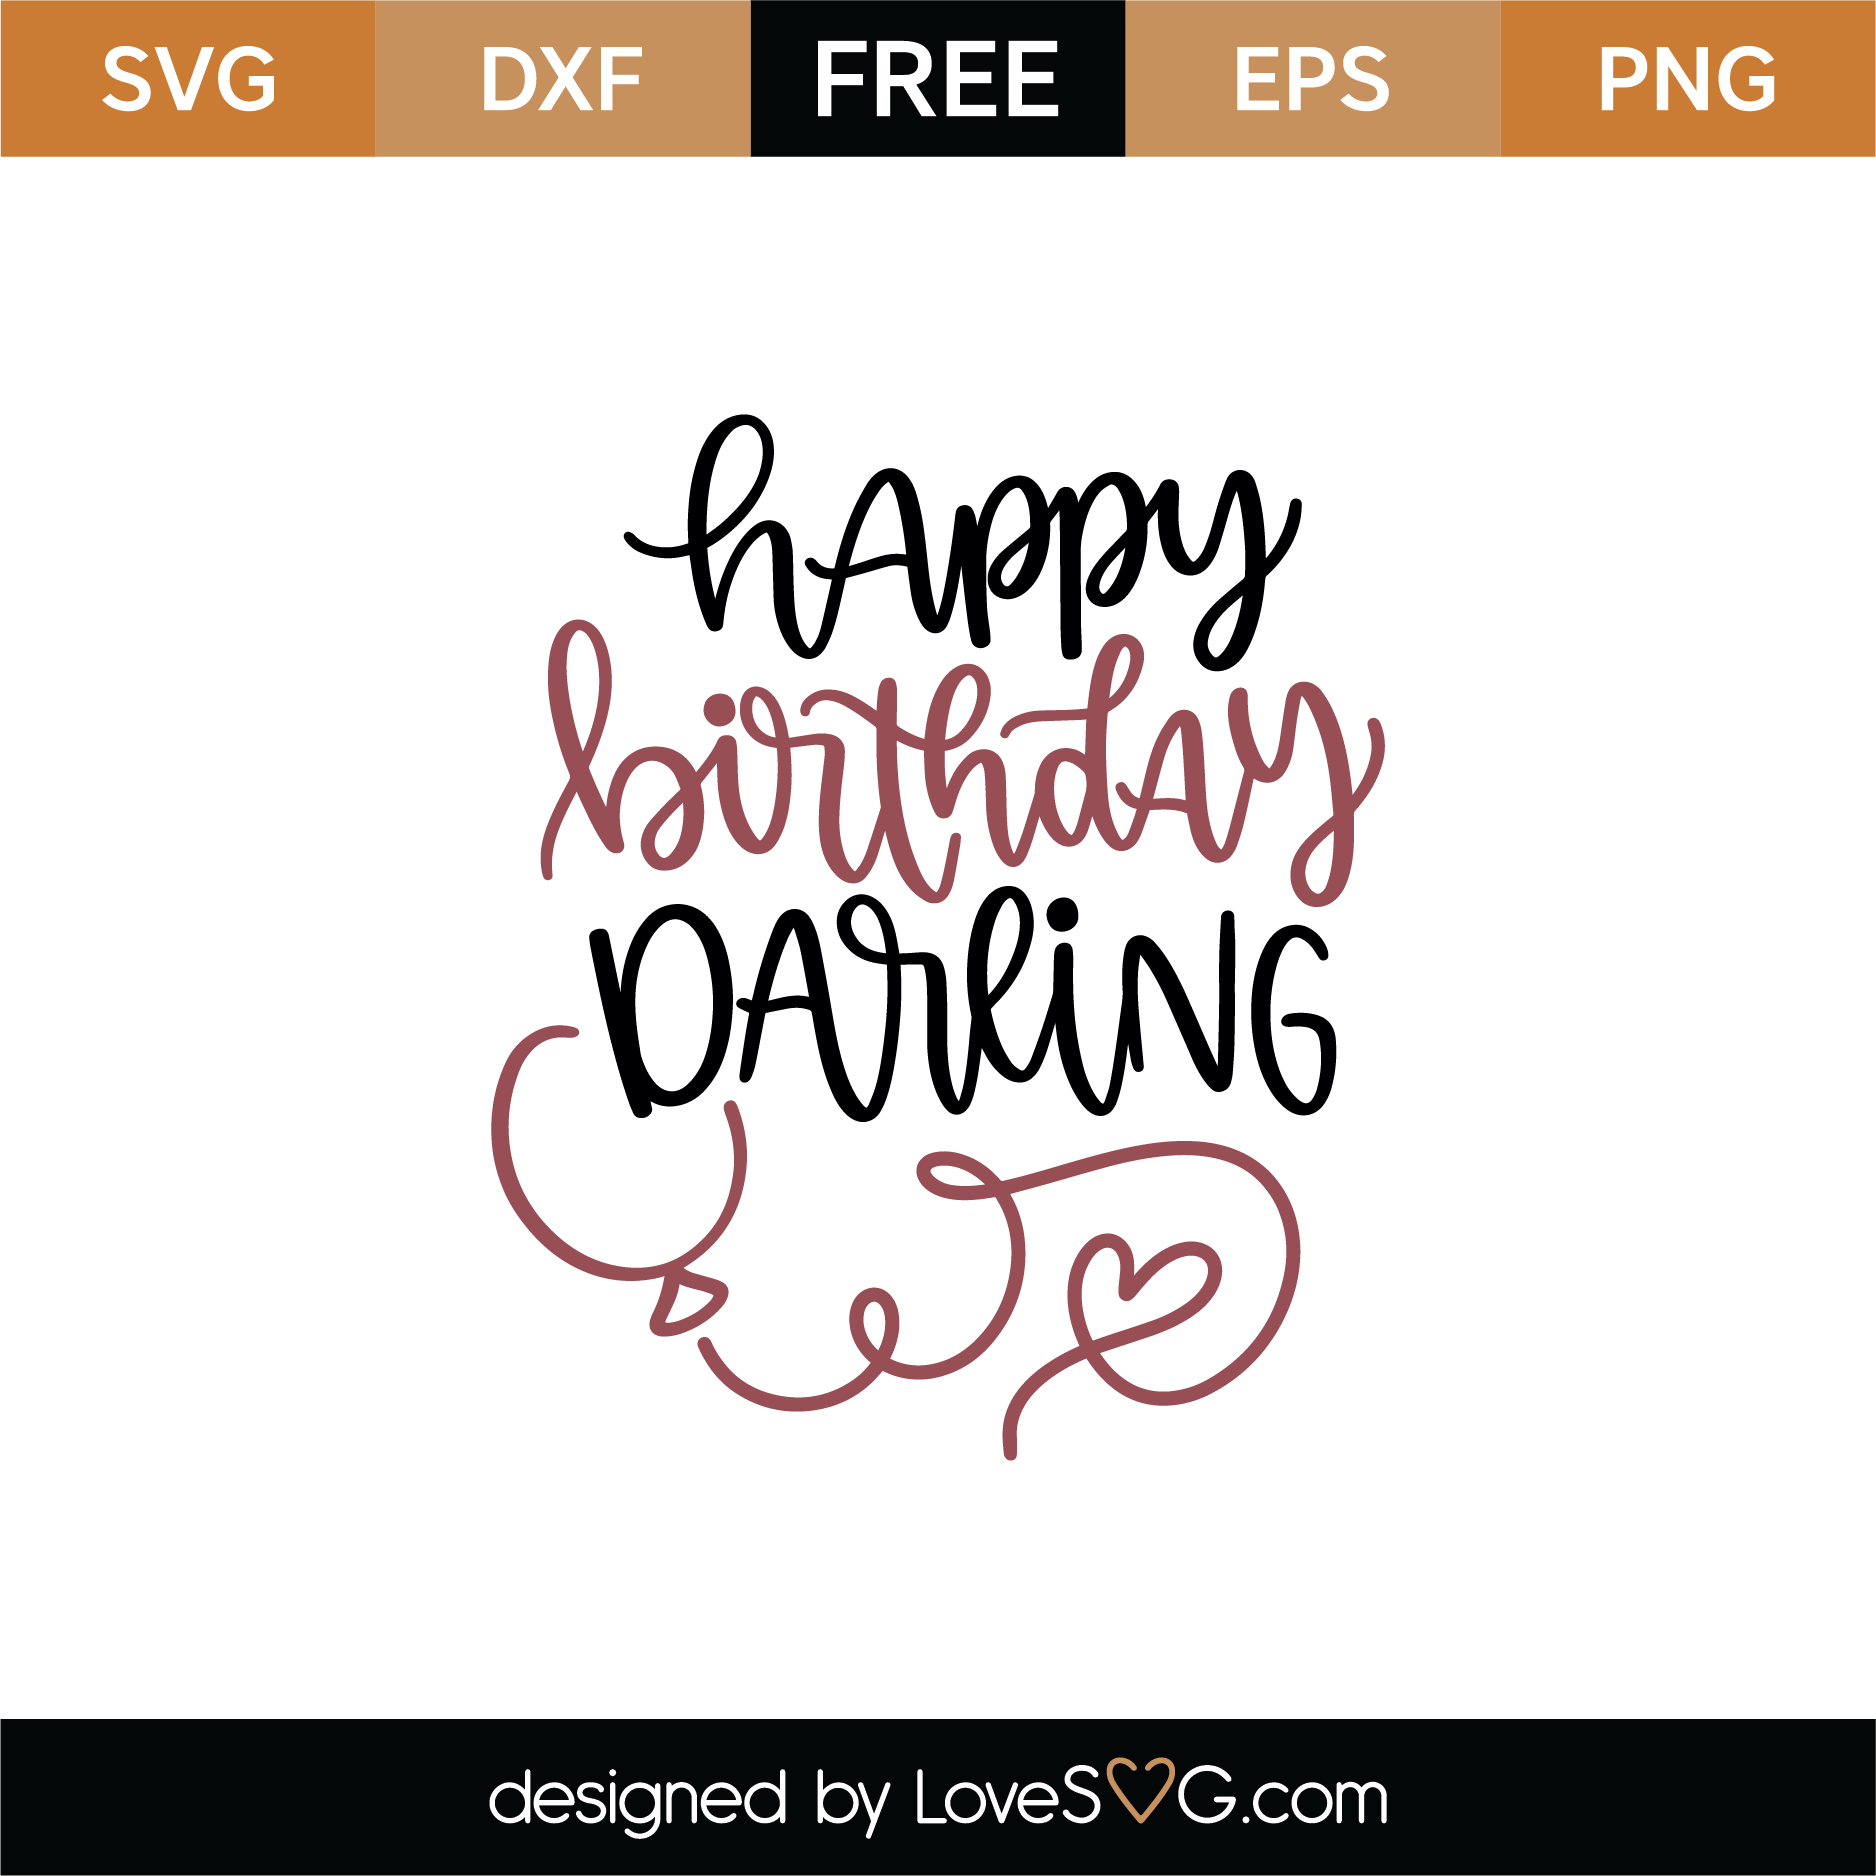 Download Free Happy Birthday Darling SVG Cut File | Lovesvg.com